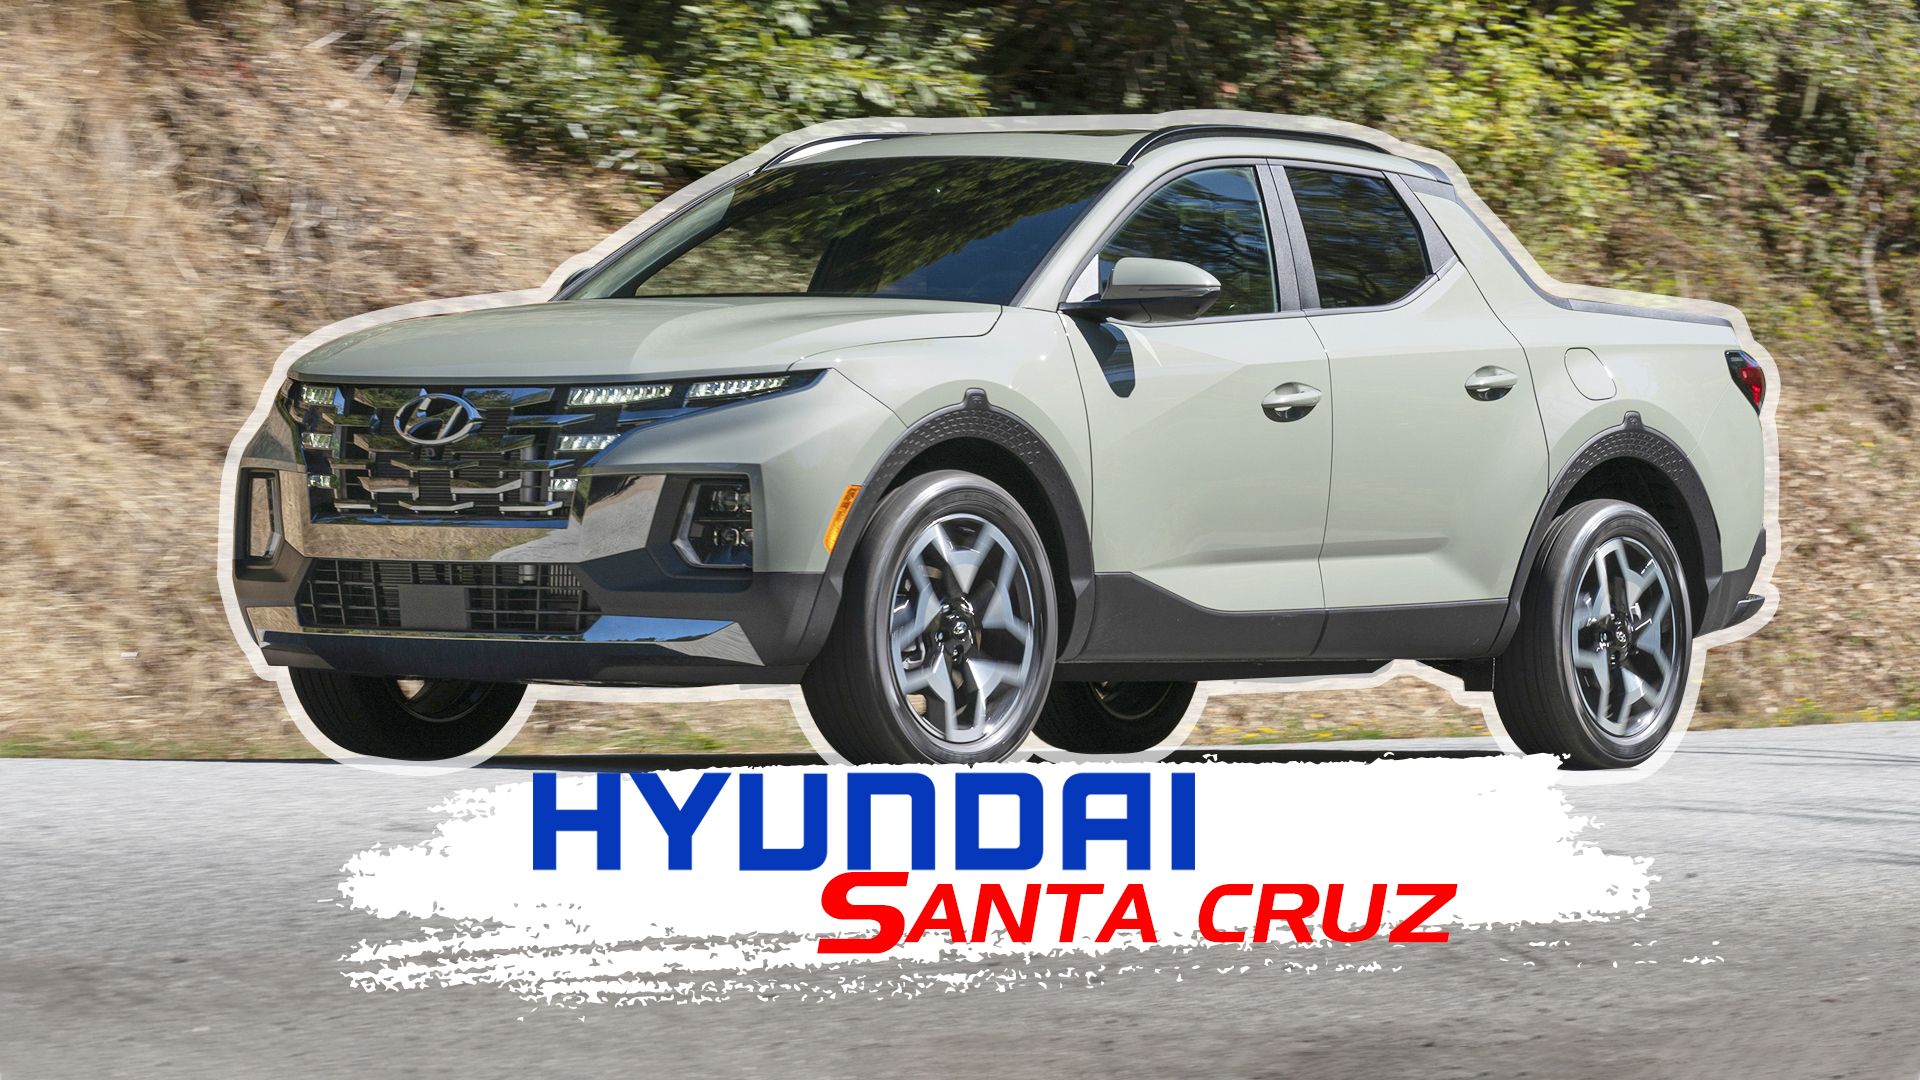 2022 Hyundai Santa Cruz: We Put Korea's First-ever Pickup to the